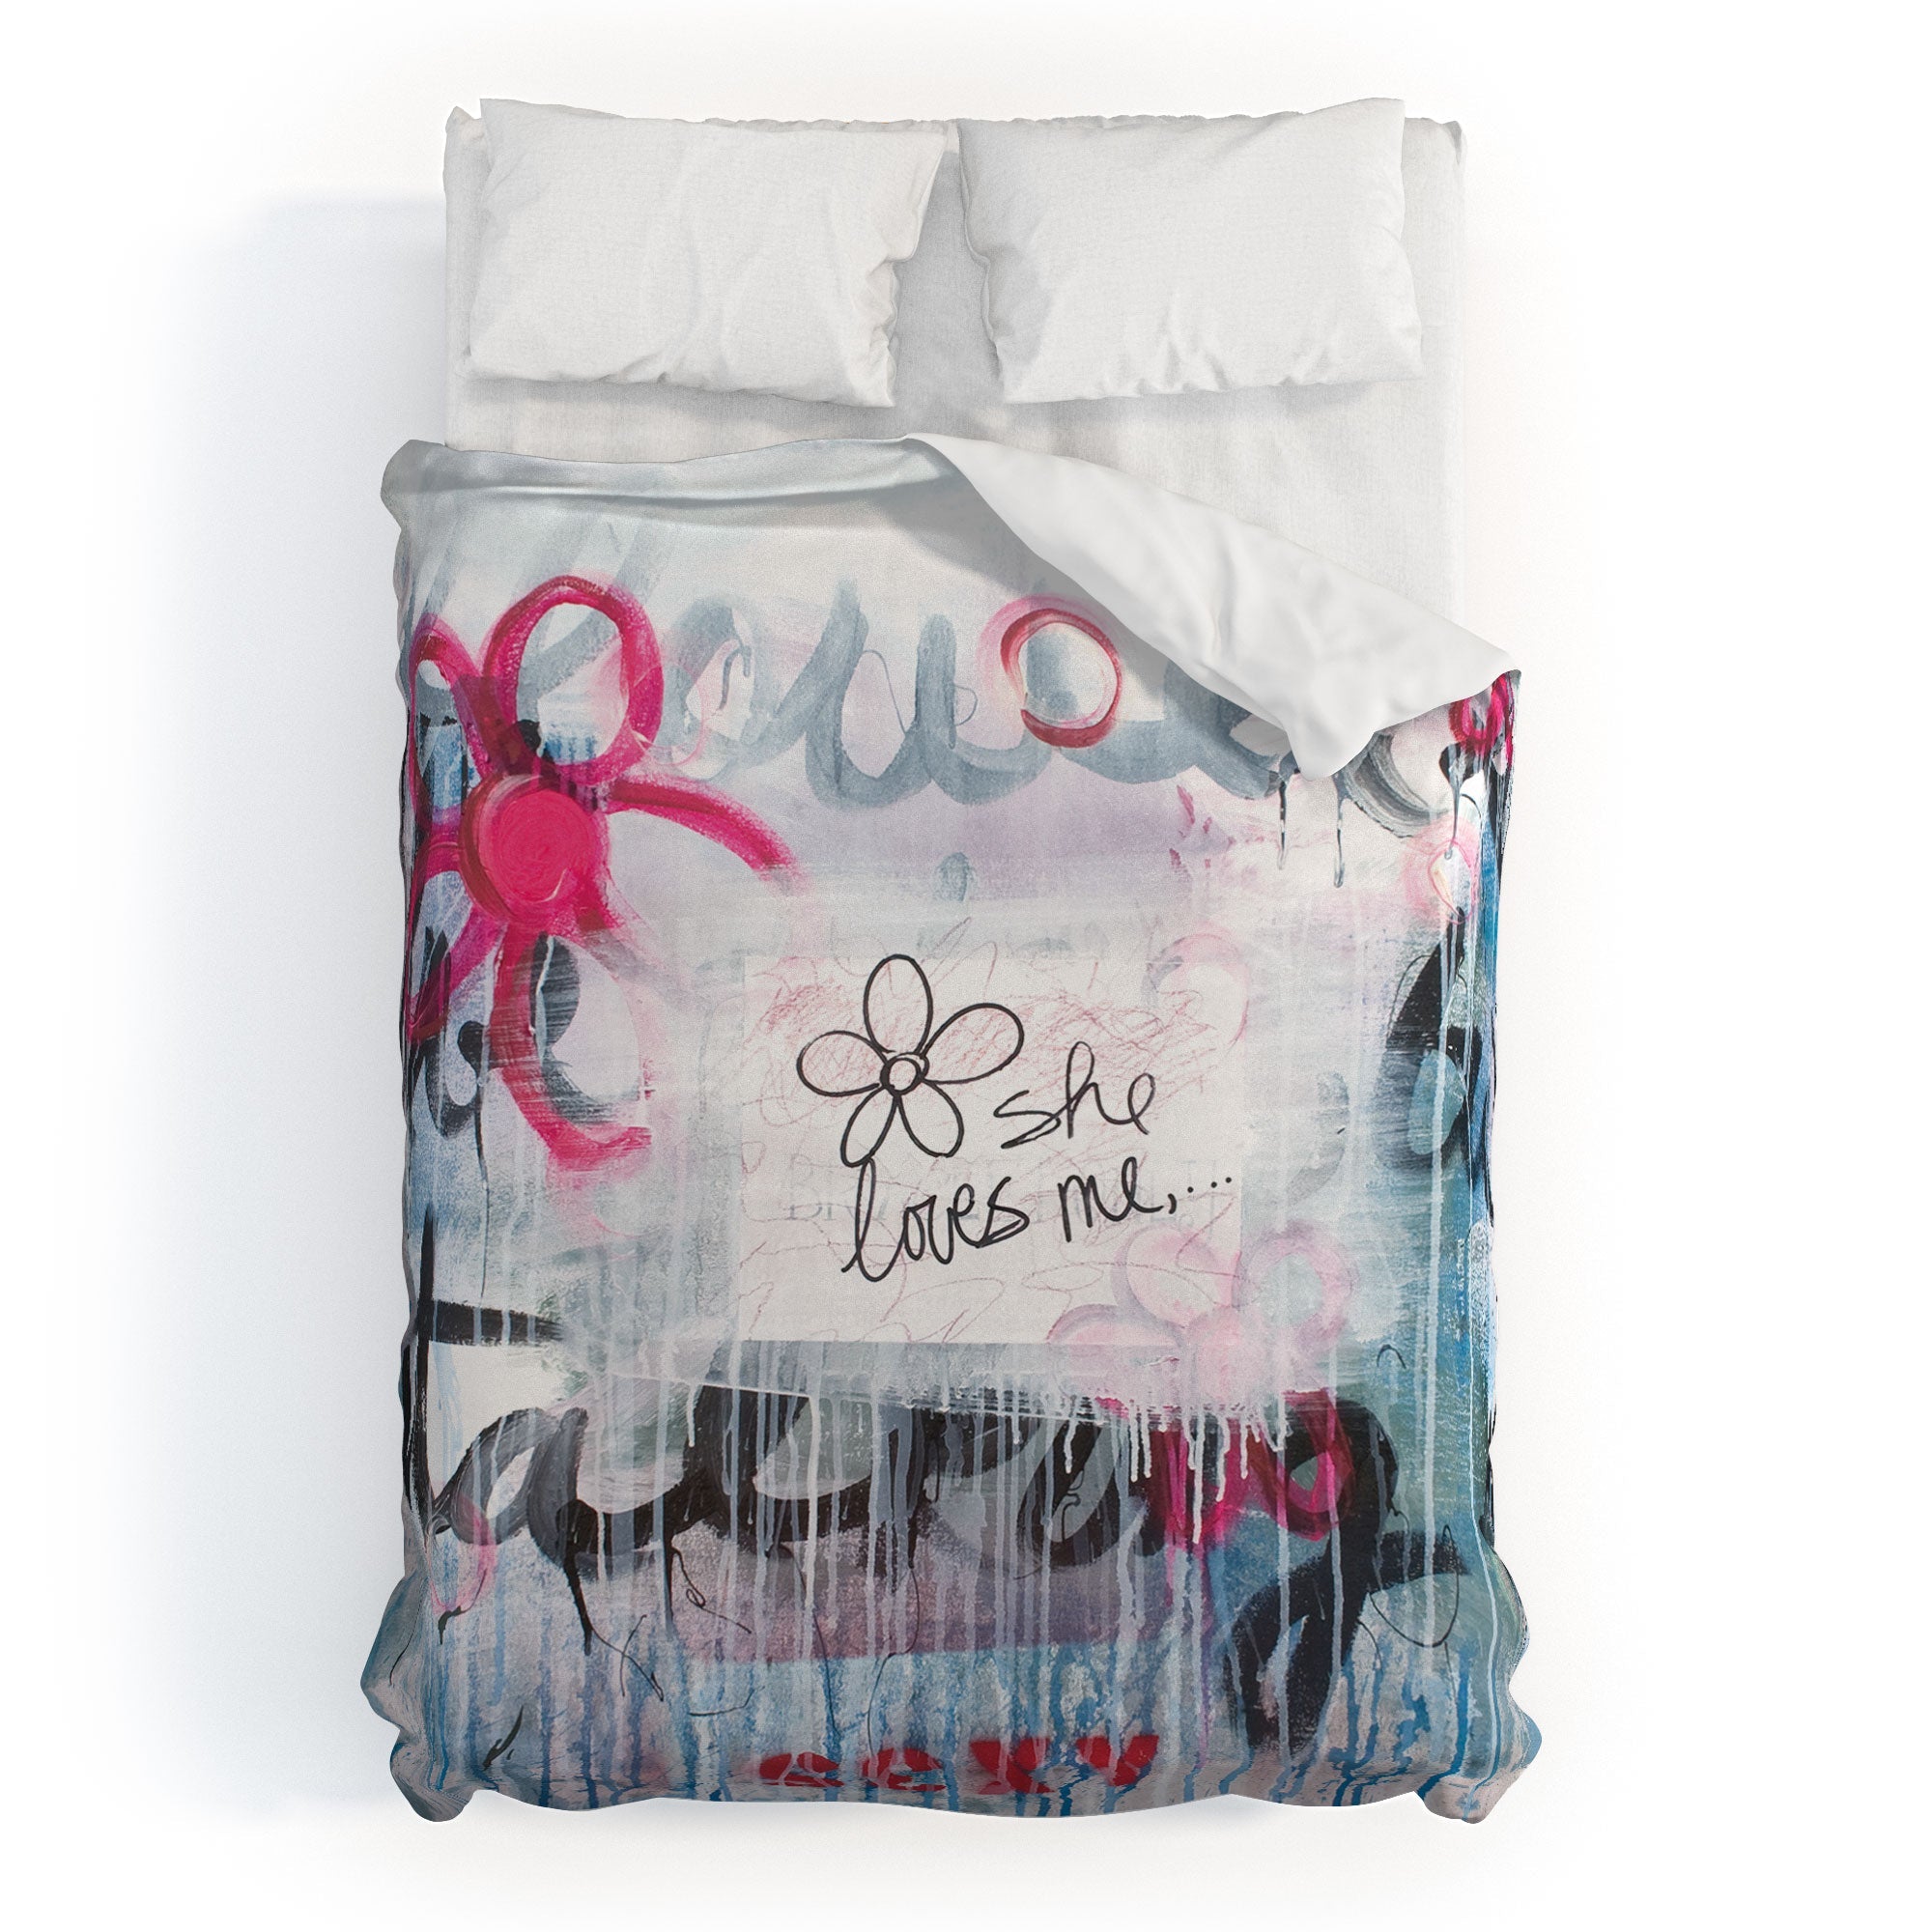 "she loves me" comforter + bed in a bag